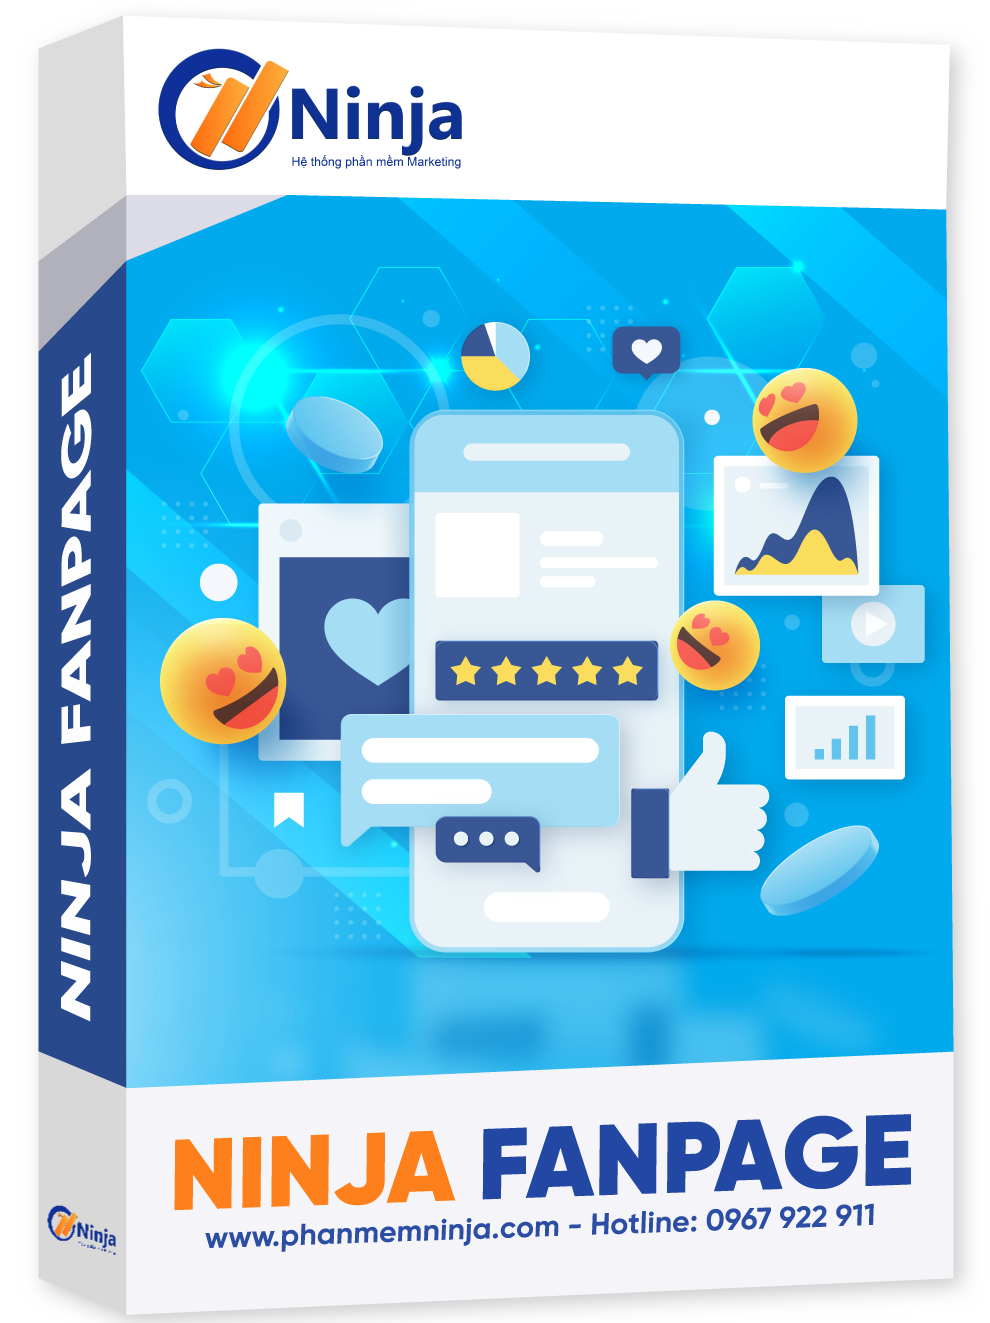 Ninja Fanpage